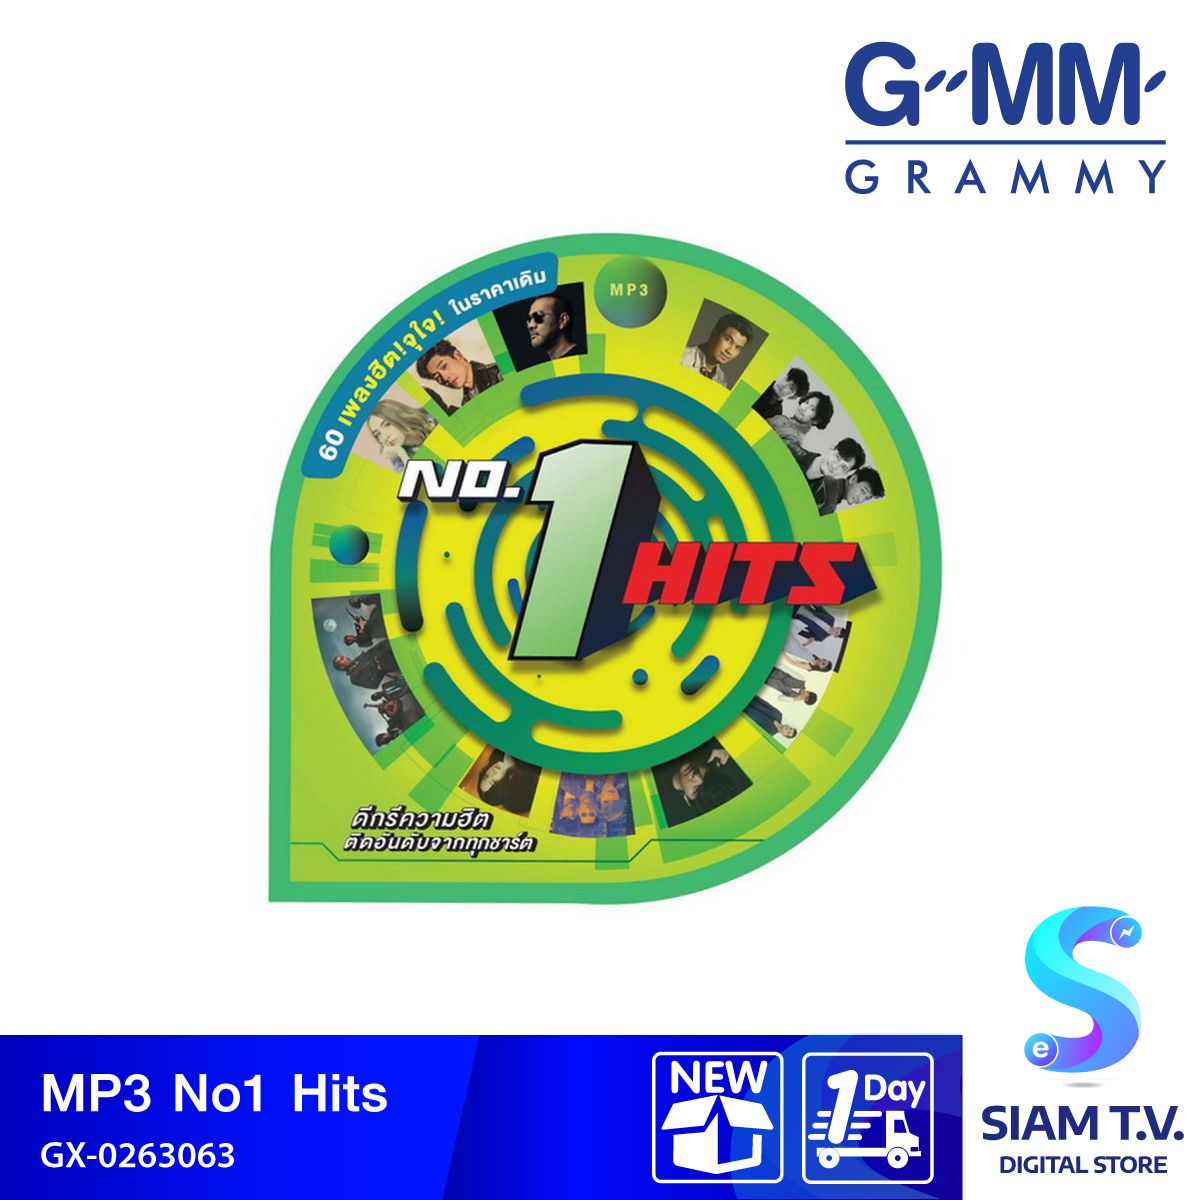 GMM GRAMMY  MP3   No1 Hits